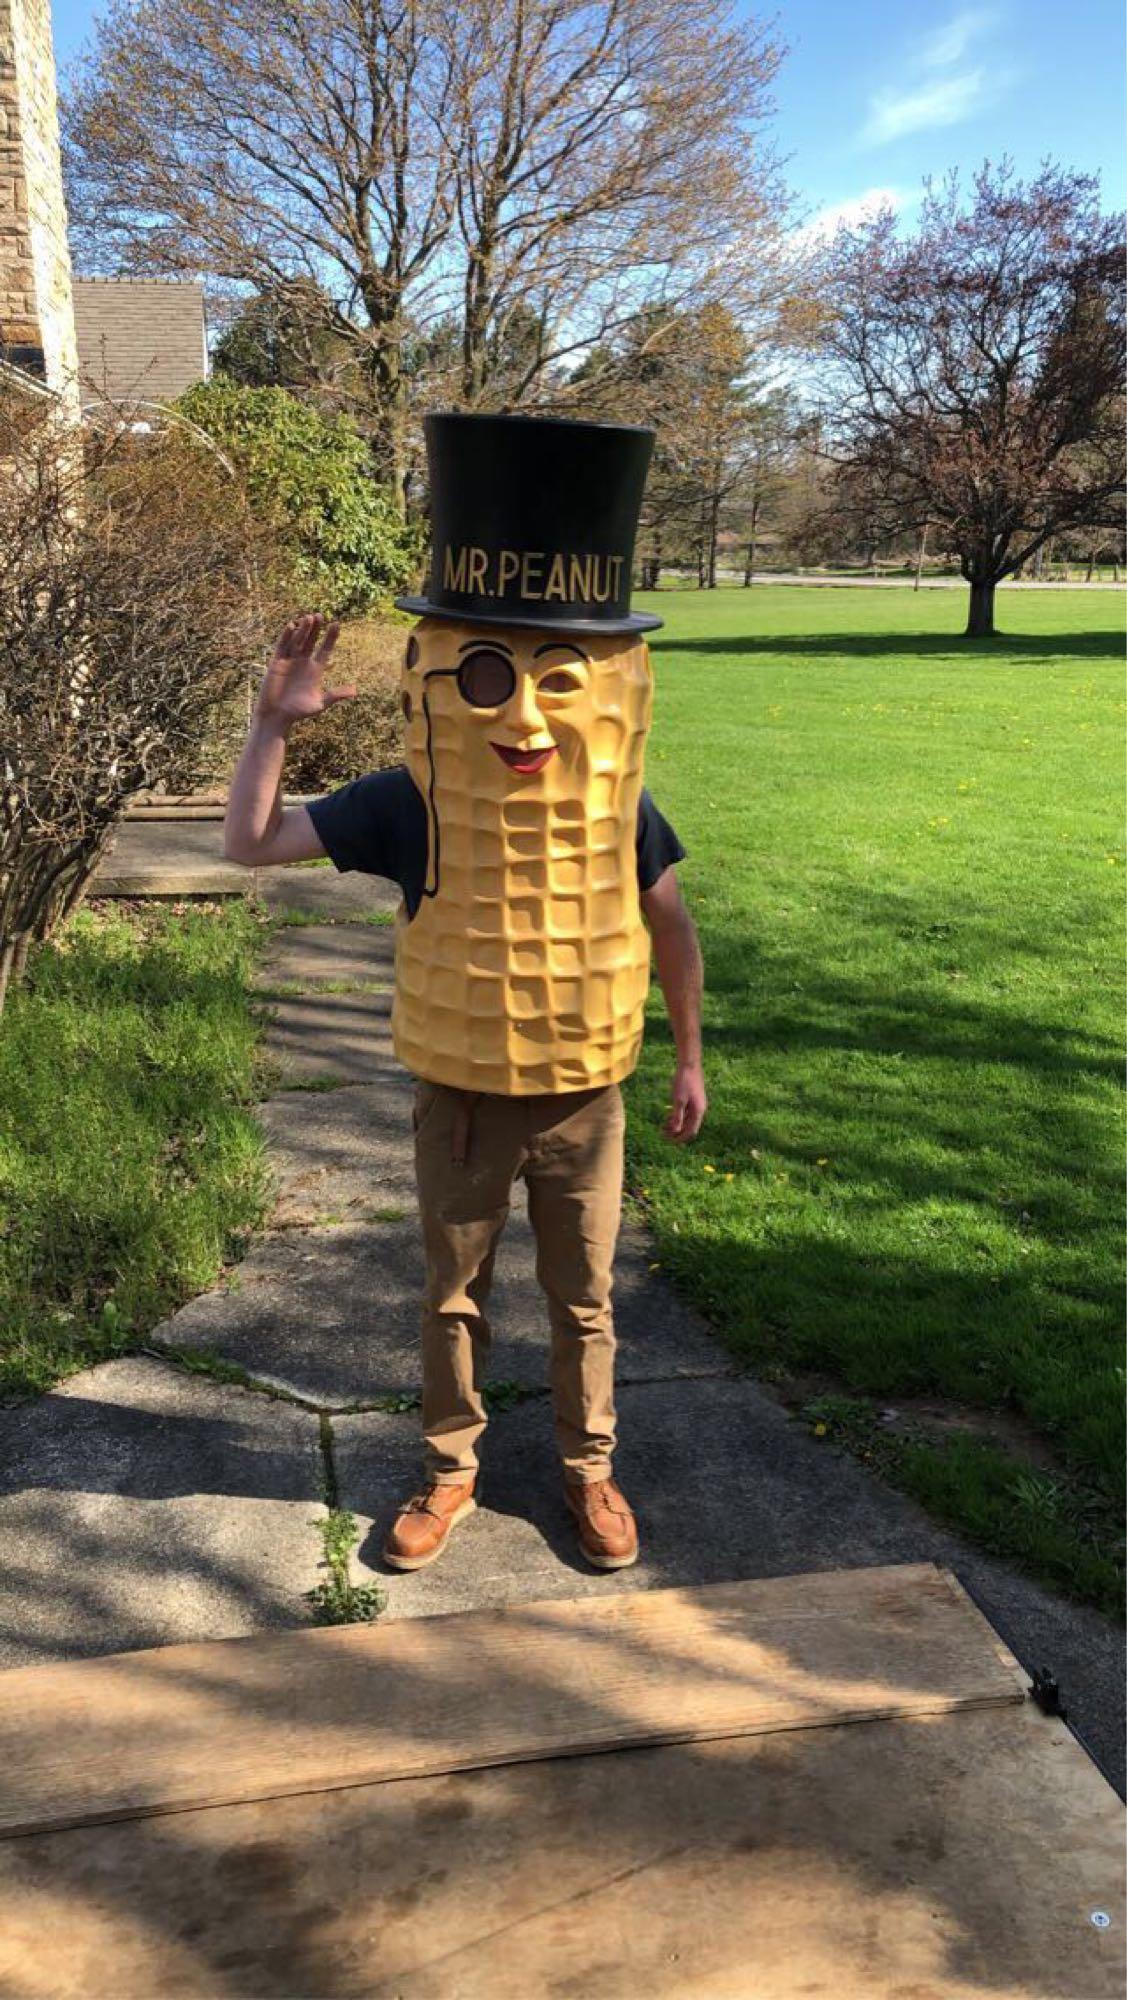 Mr. Peanut advertising costume